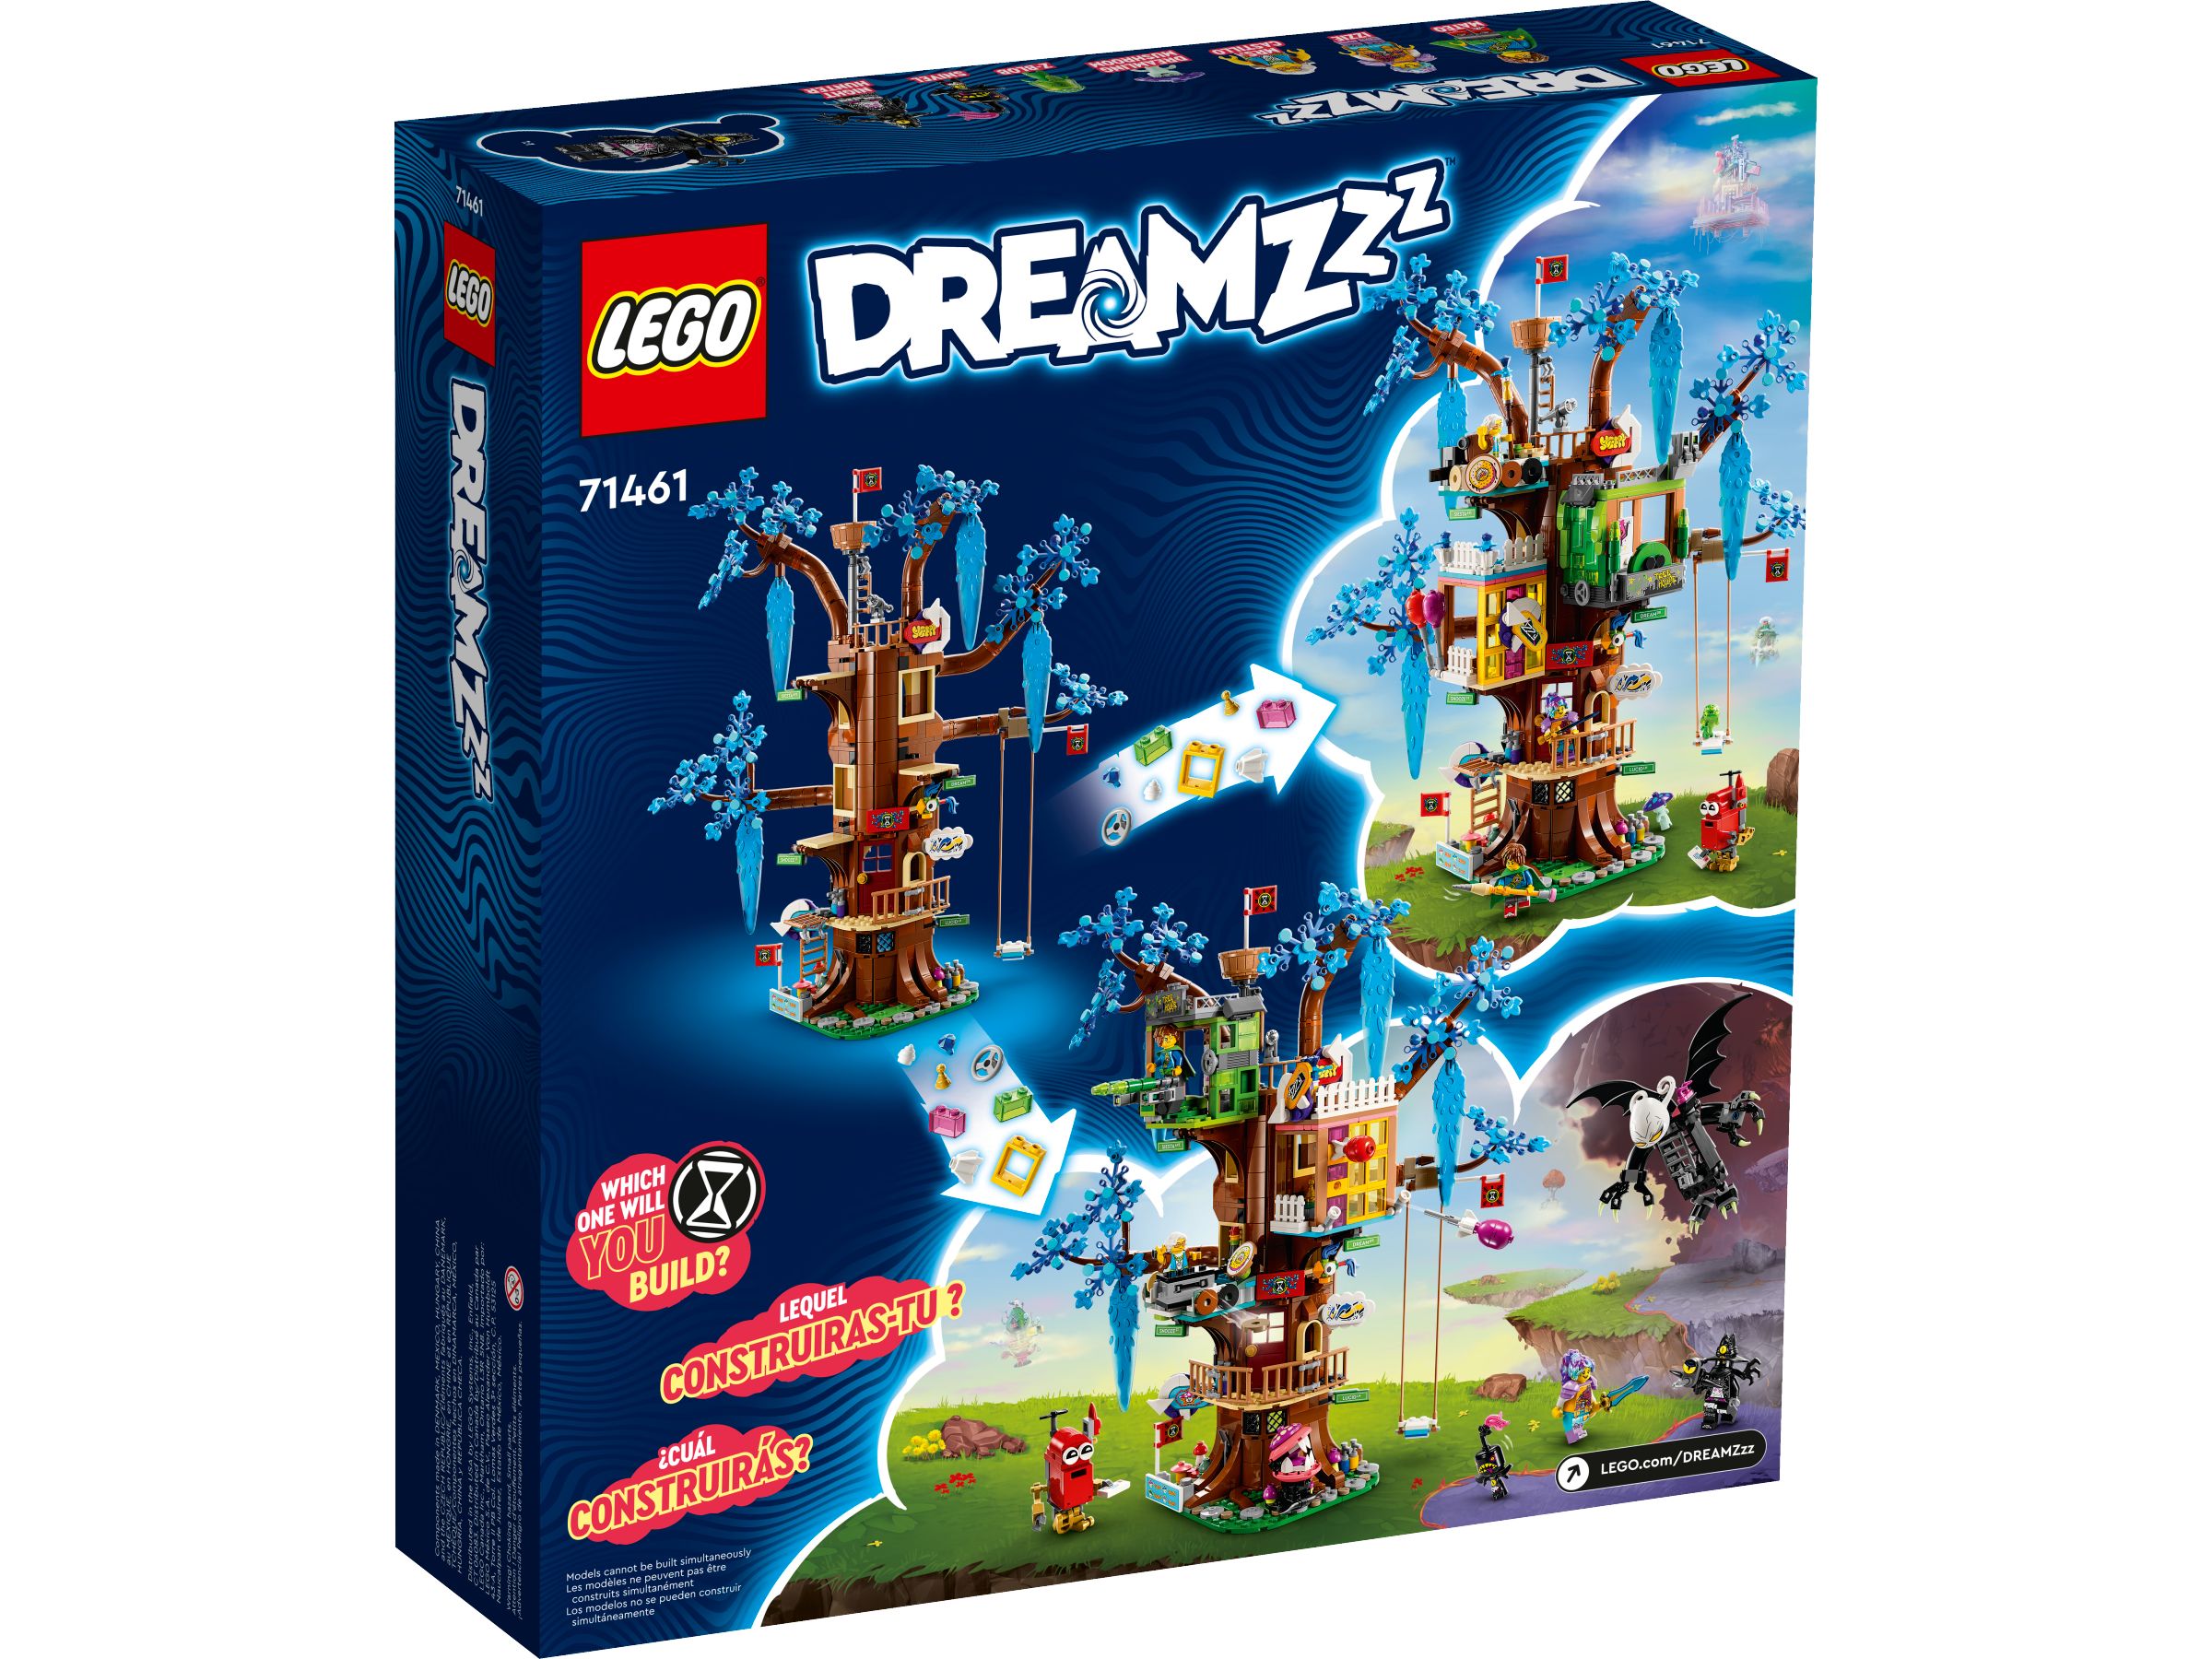 LEGO Dreamzzz 71461 Fantastisches Baumhaus LEGO_71461_Box5_v39.jpg